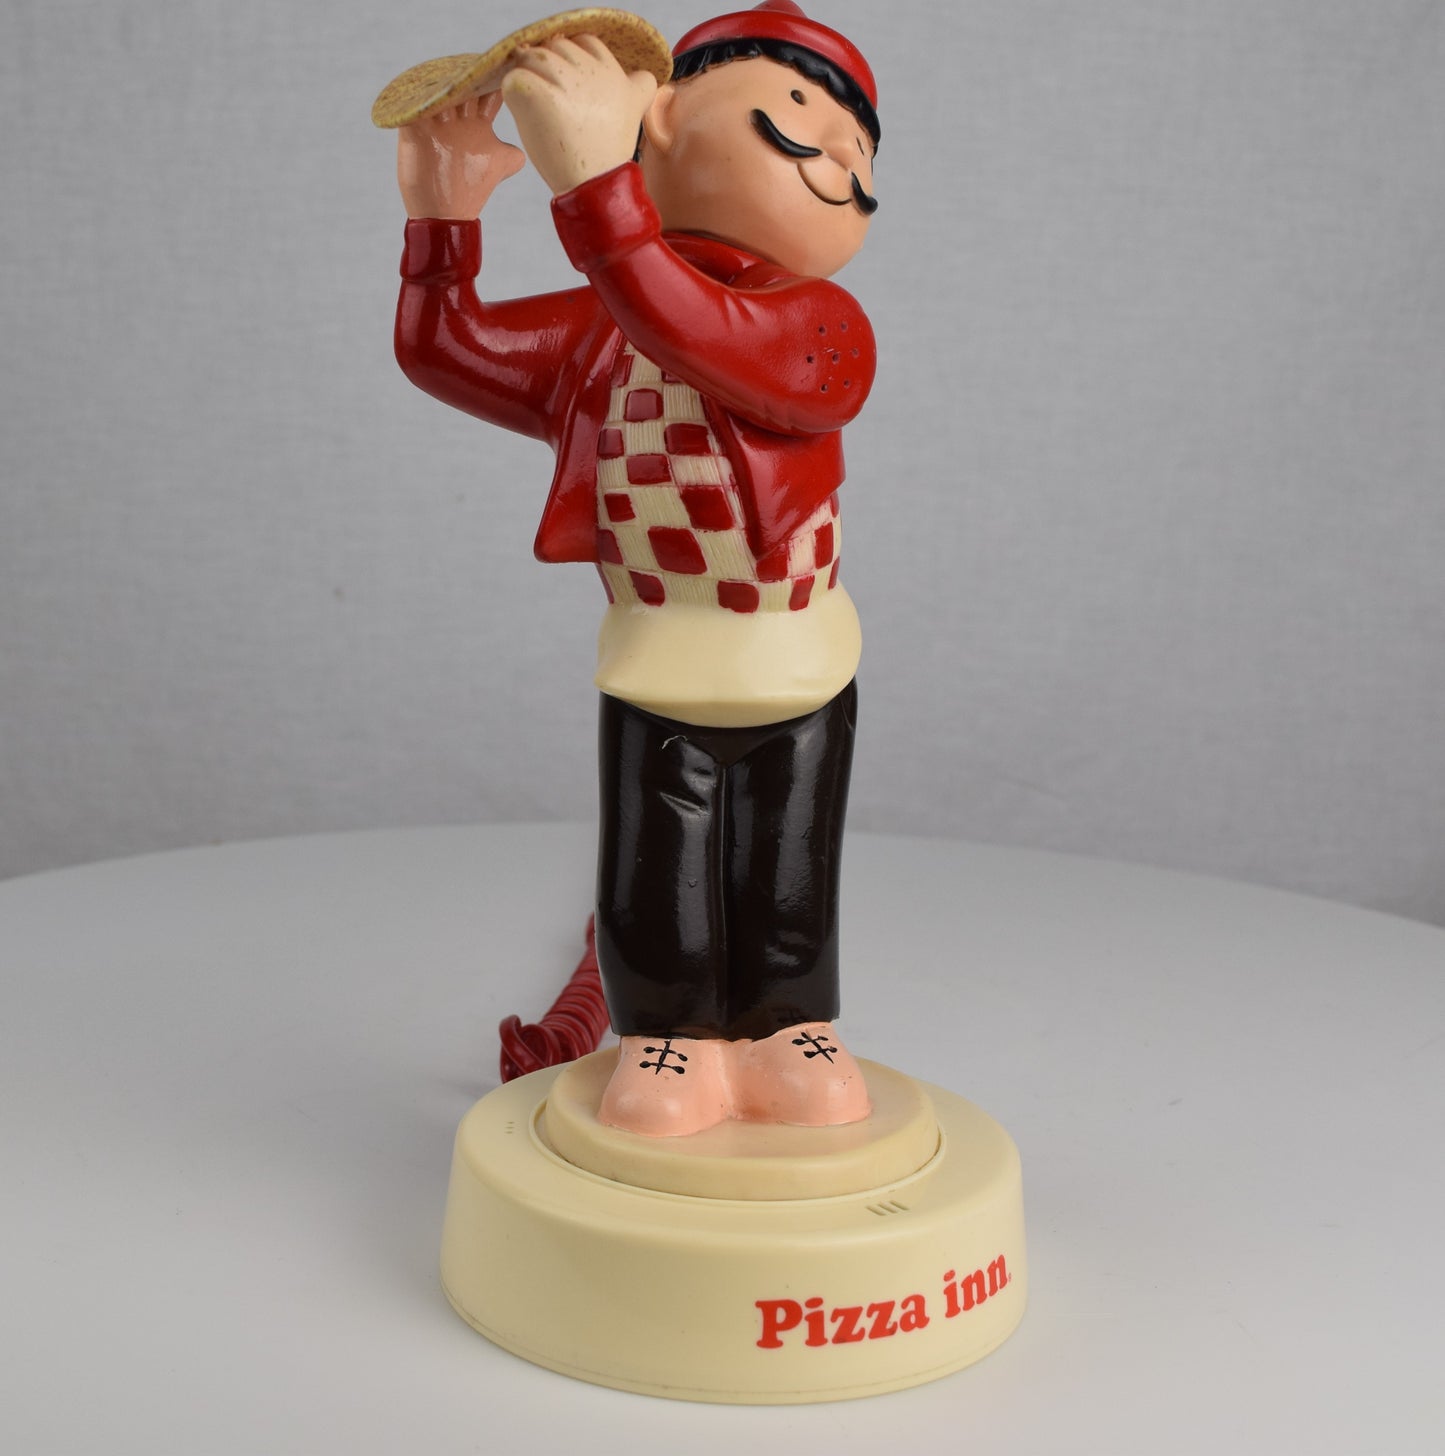 Pizza Inn Promotional Telephone